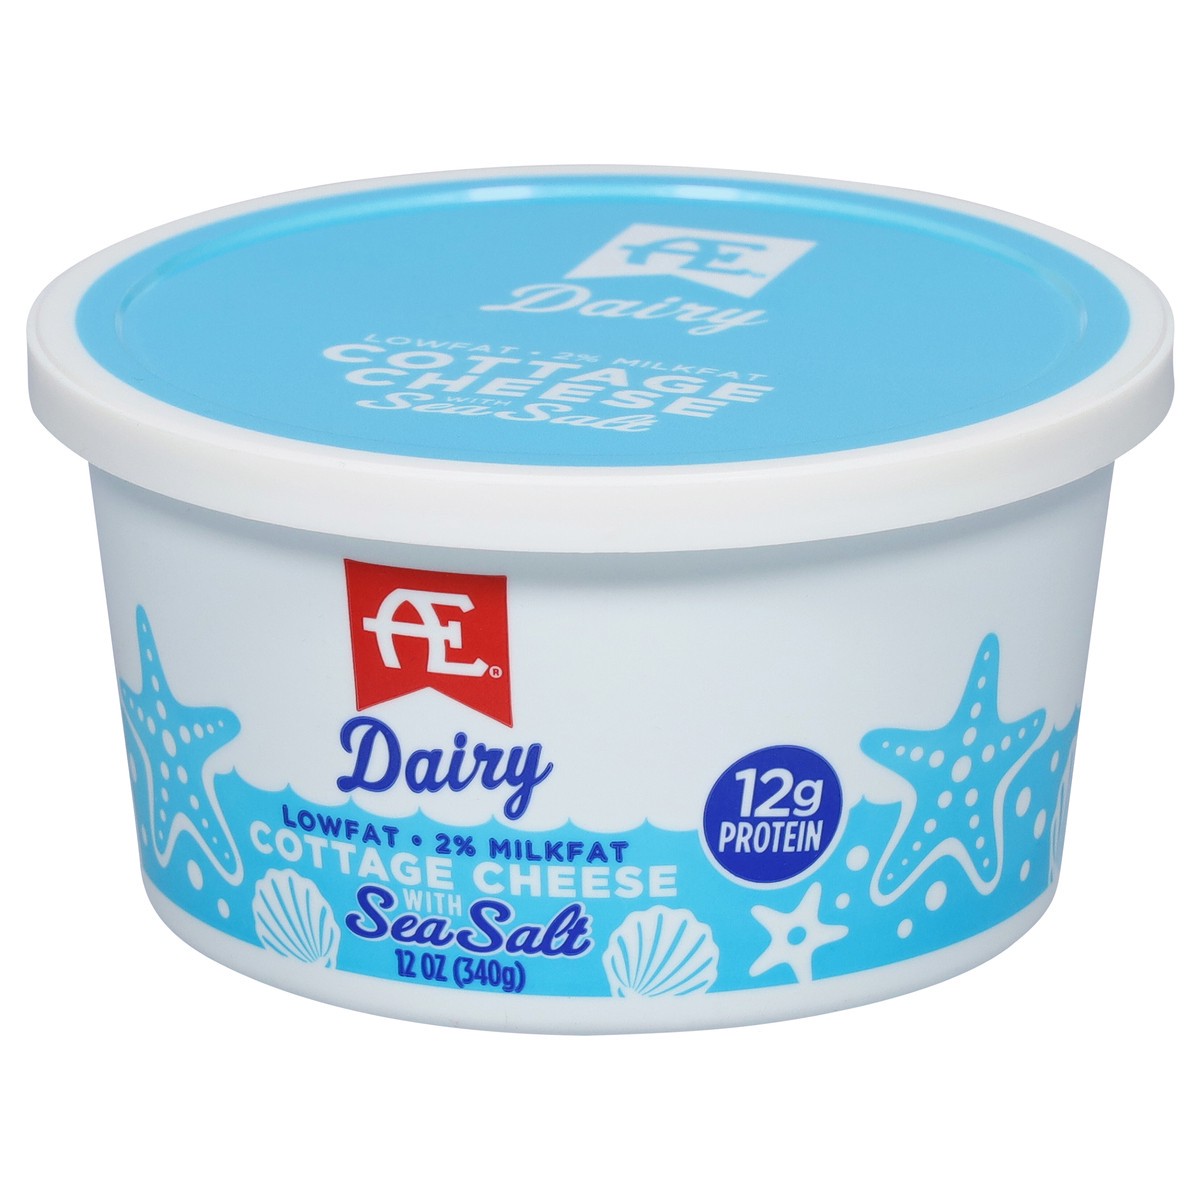 slide 3 of 11, AE Dairy Lowfat 2% Milkfat Cottage Cheese with Sea Salt 12 oz, 12 oz